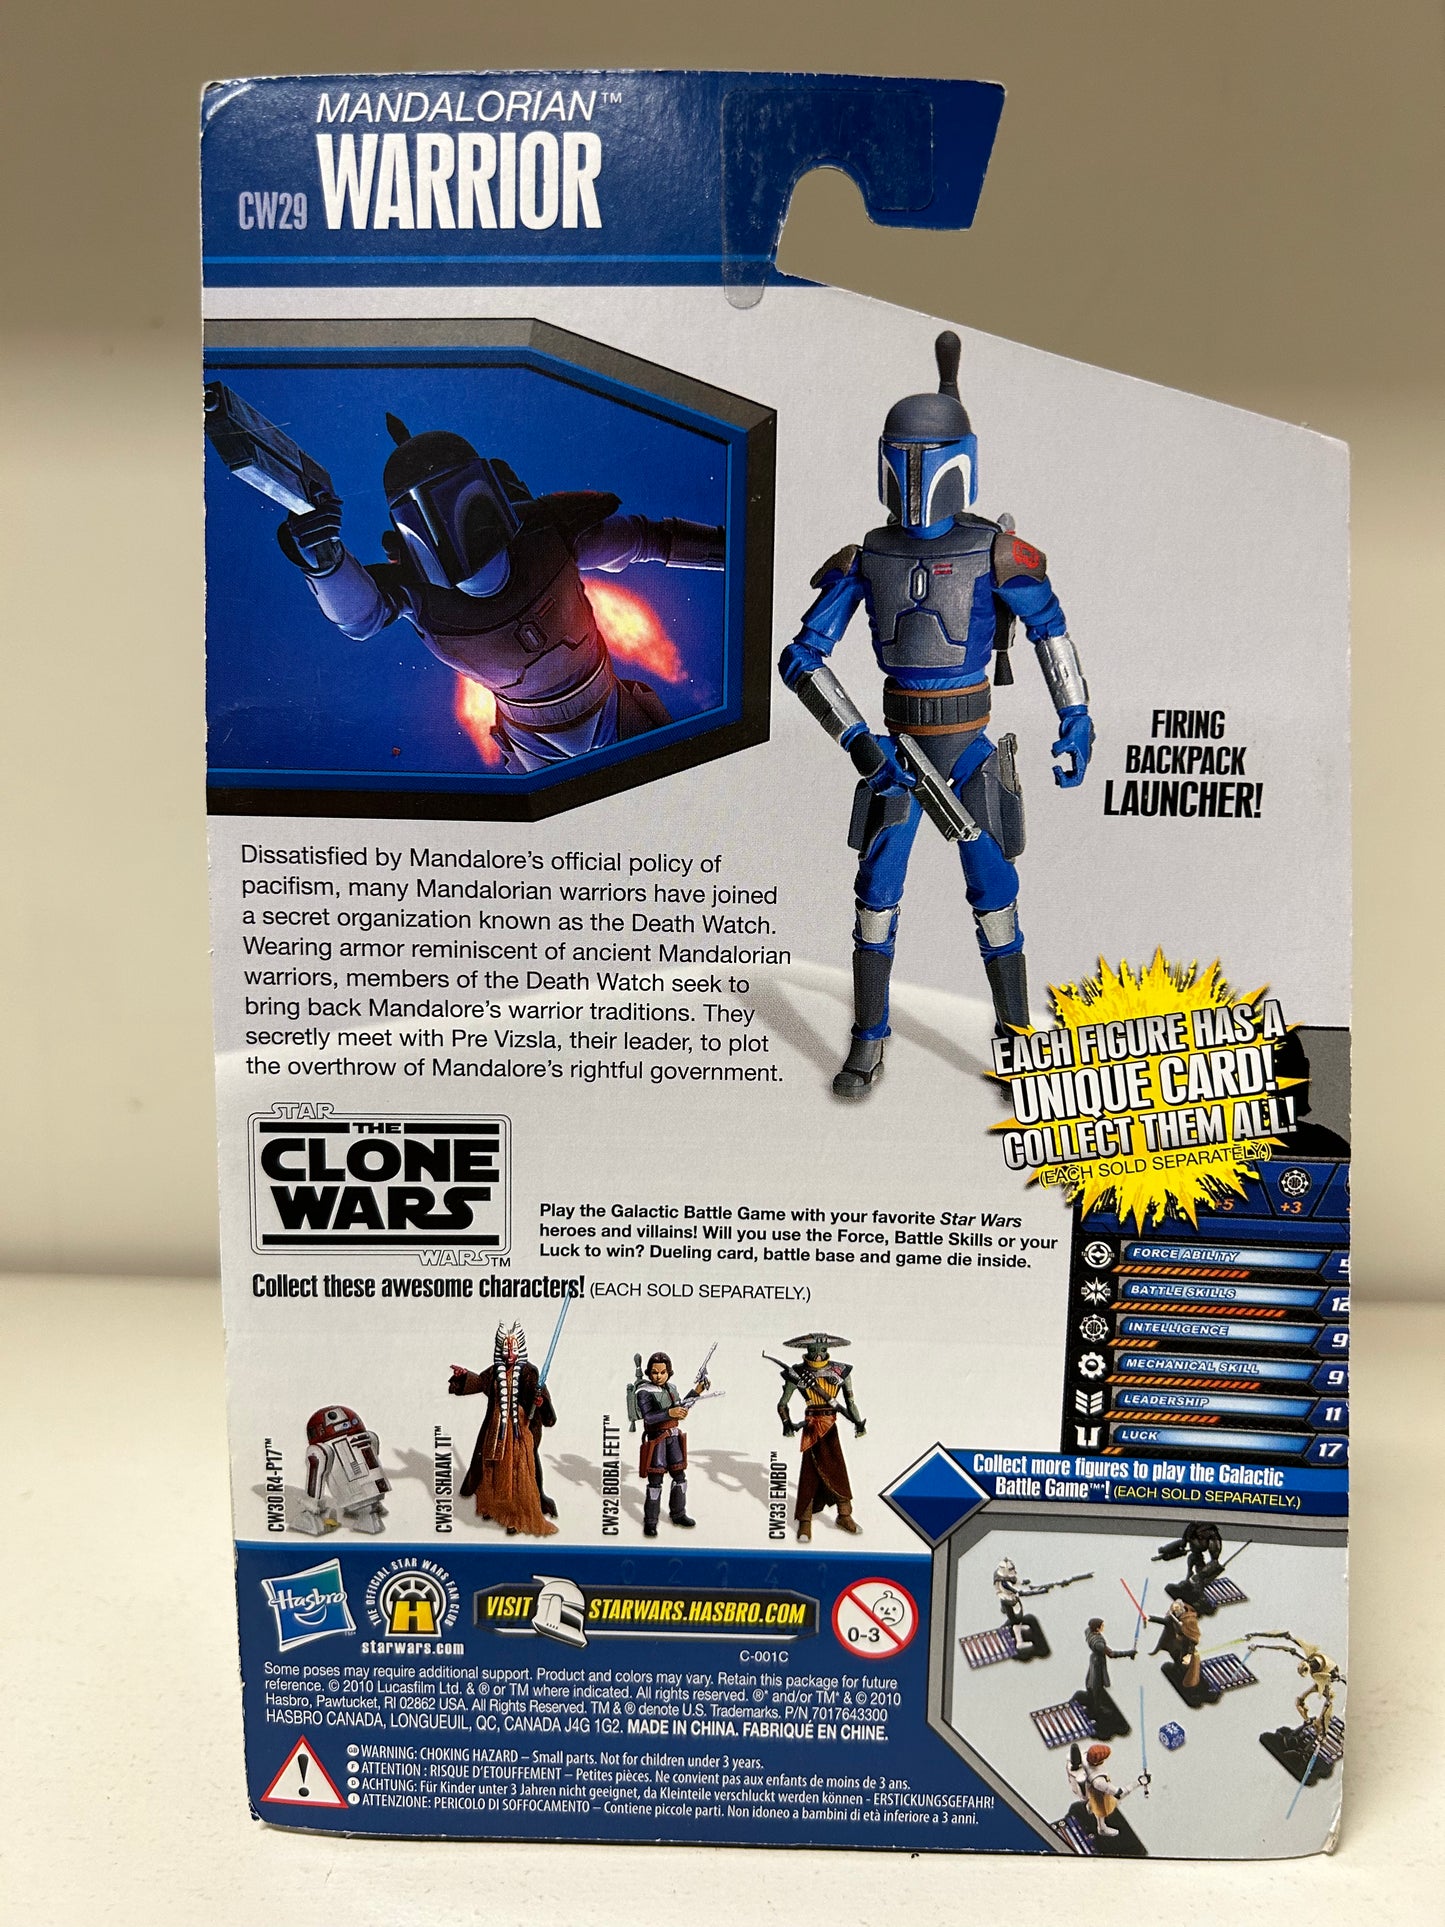 Star Wars Clone Wars Mandalorian Warrior CW29 MOC Action figure